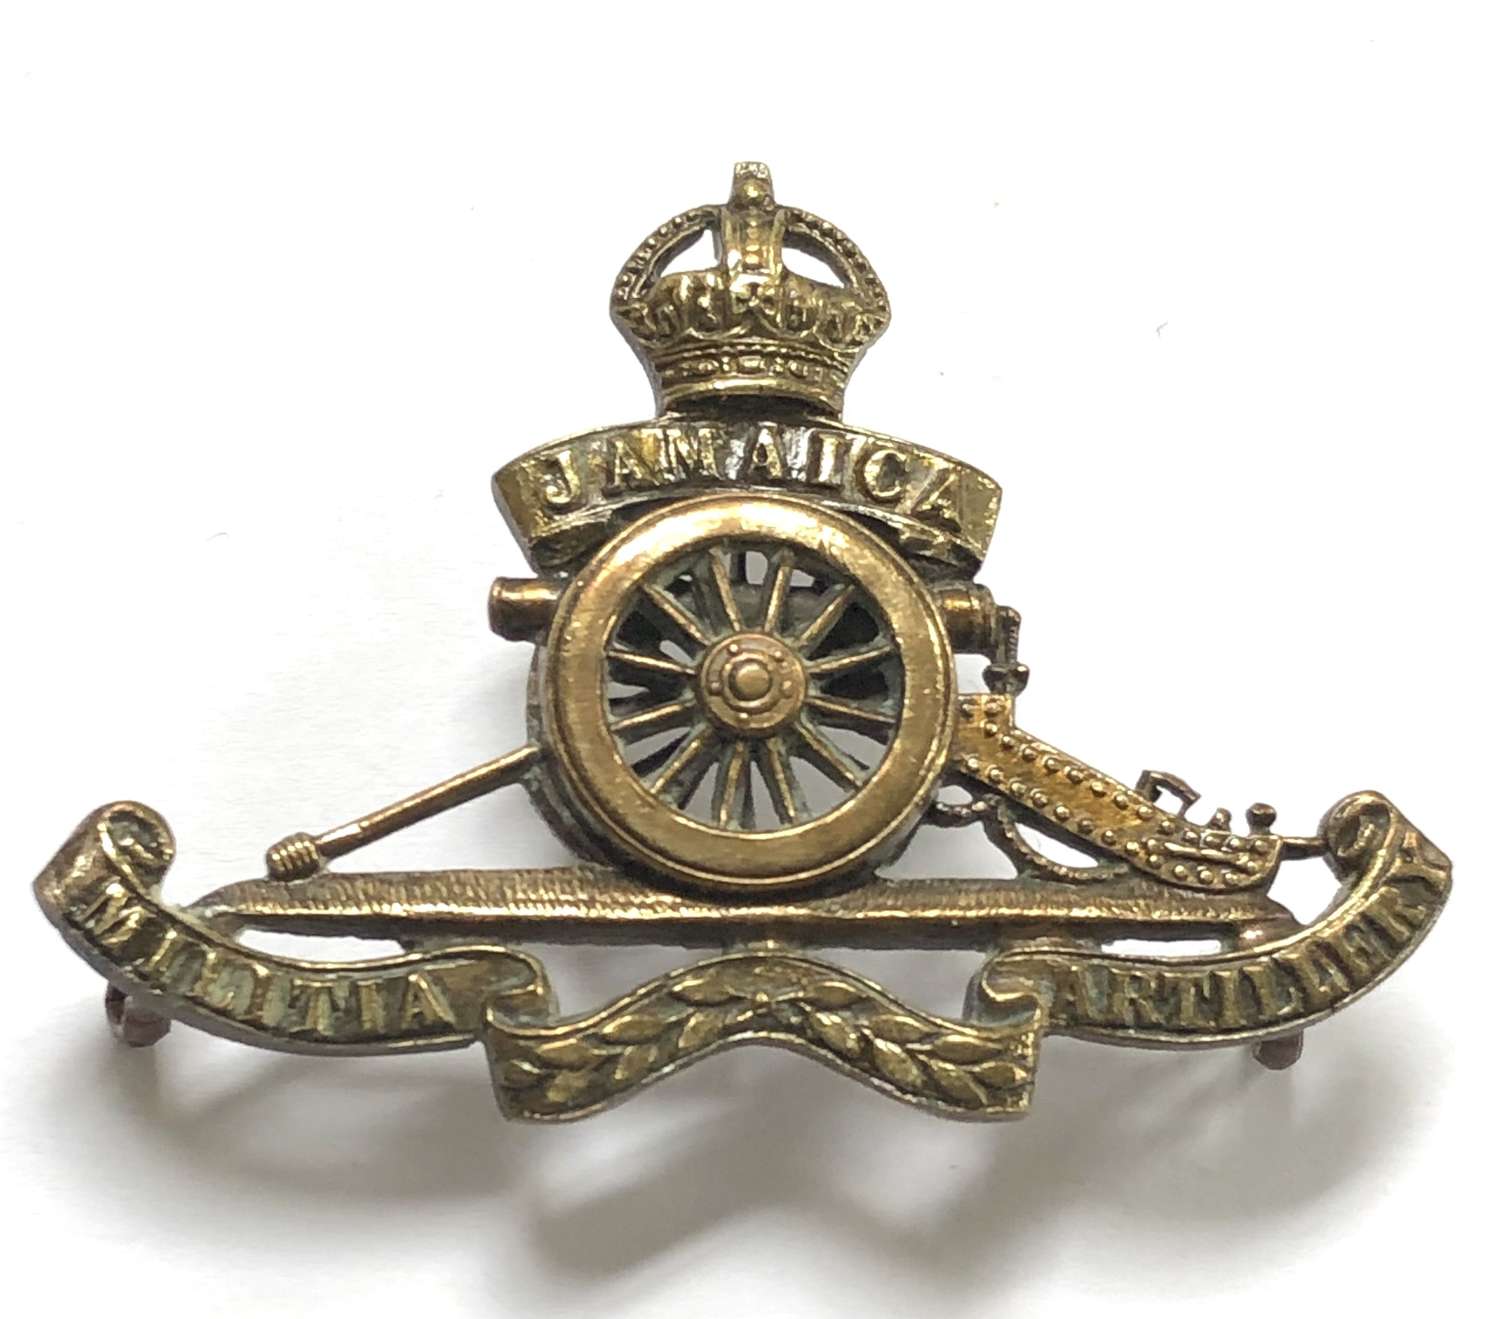 Jamaica Militia Artillery OSD cap badge by Gaunt